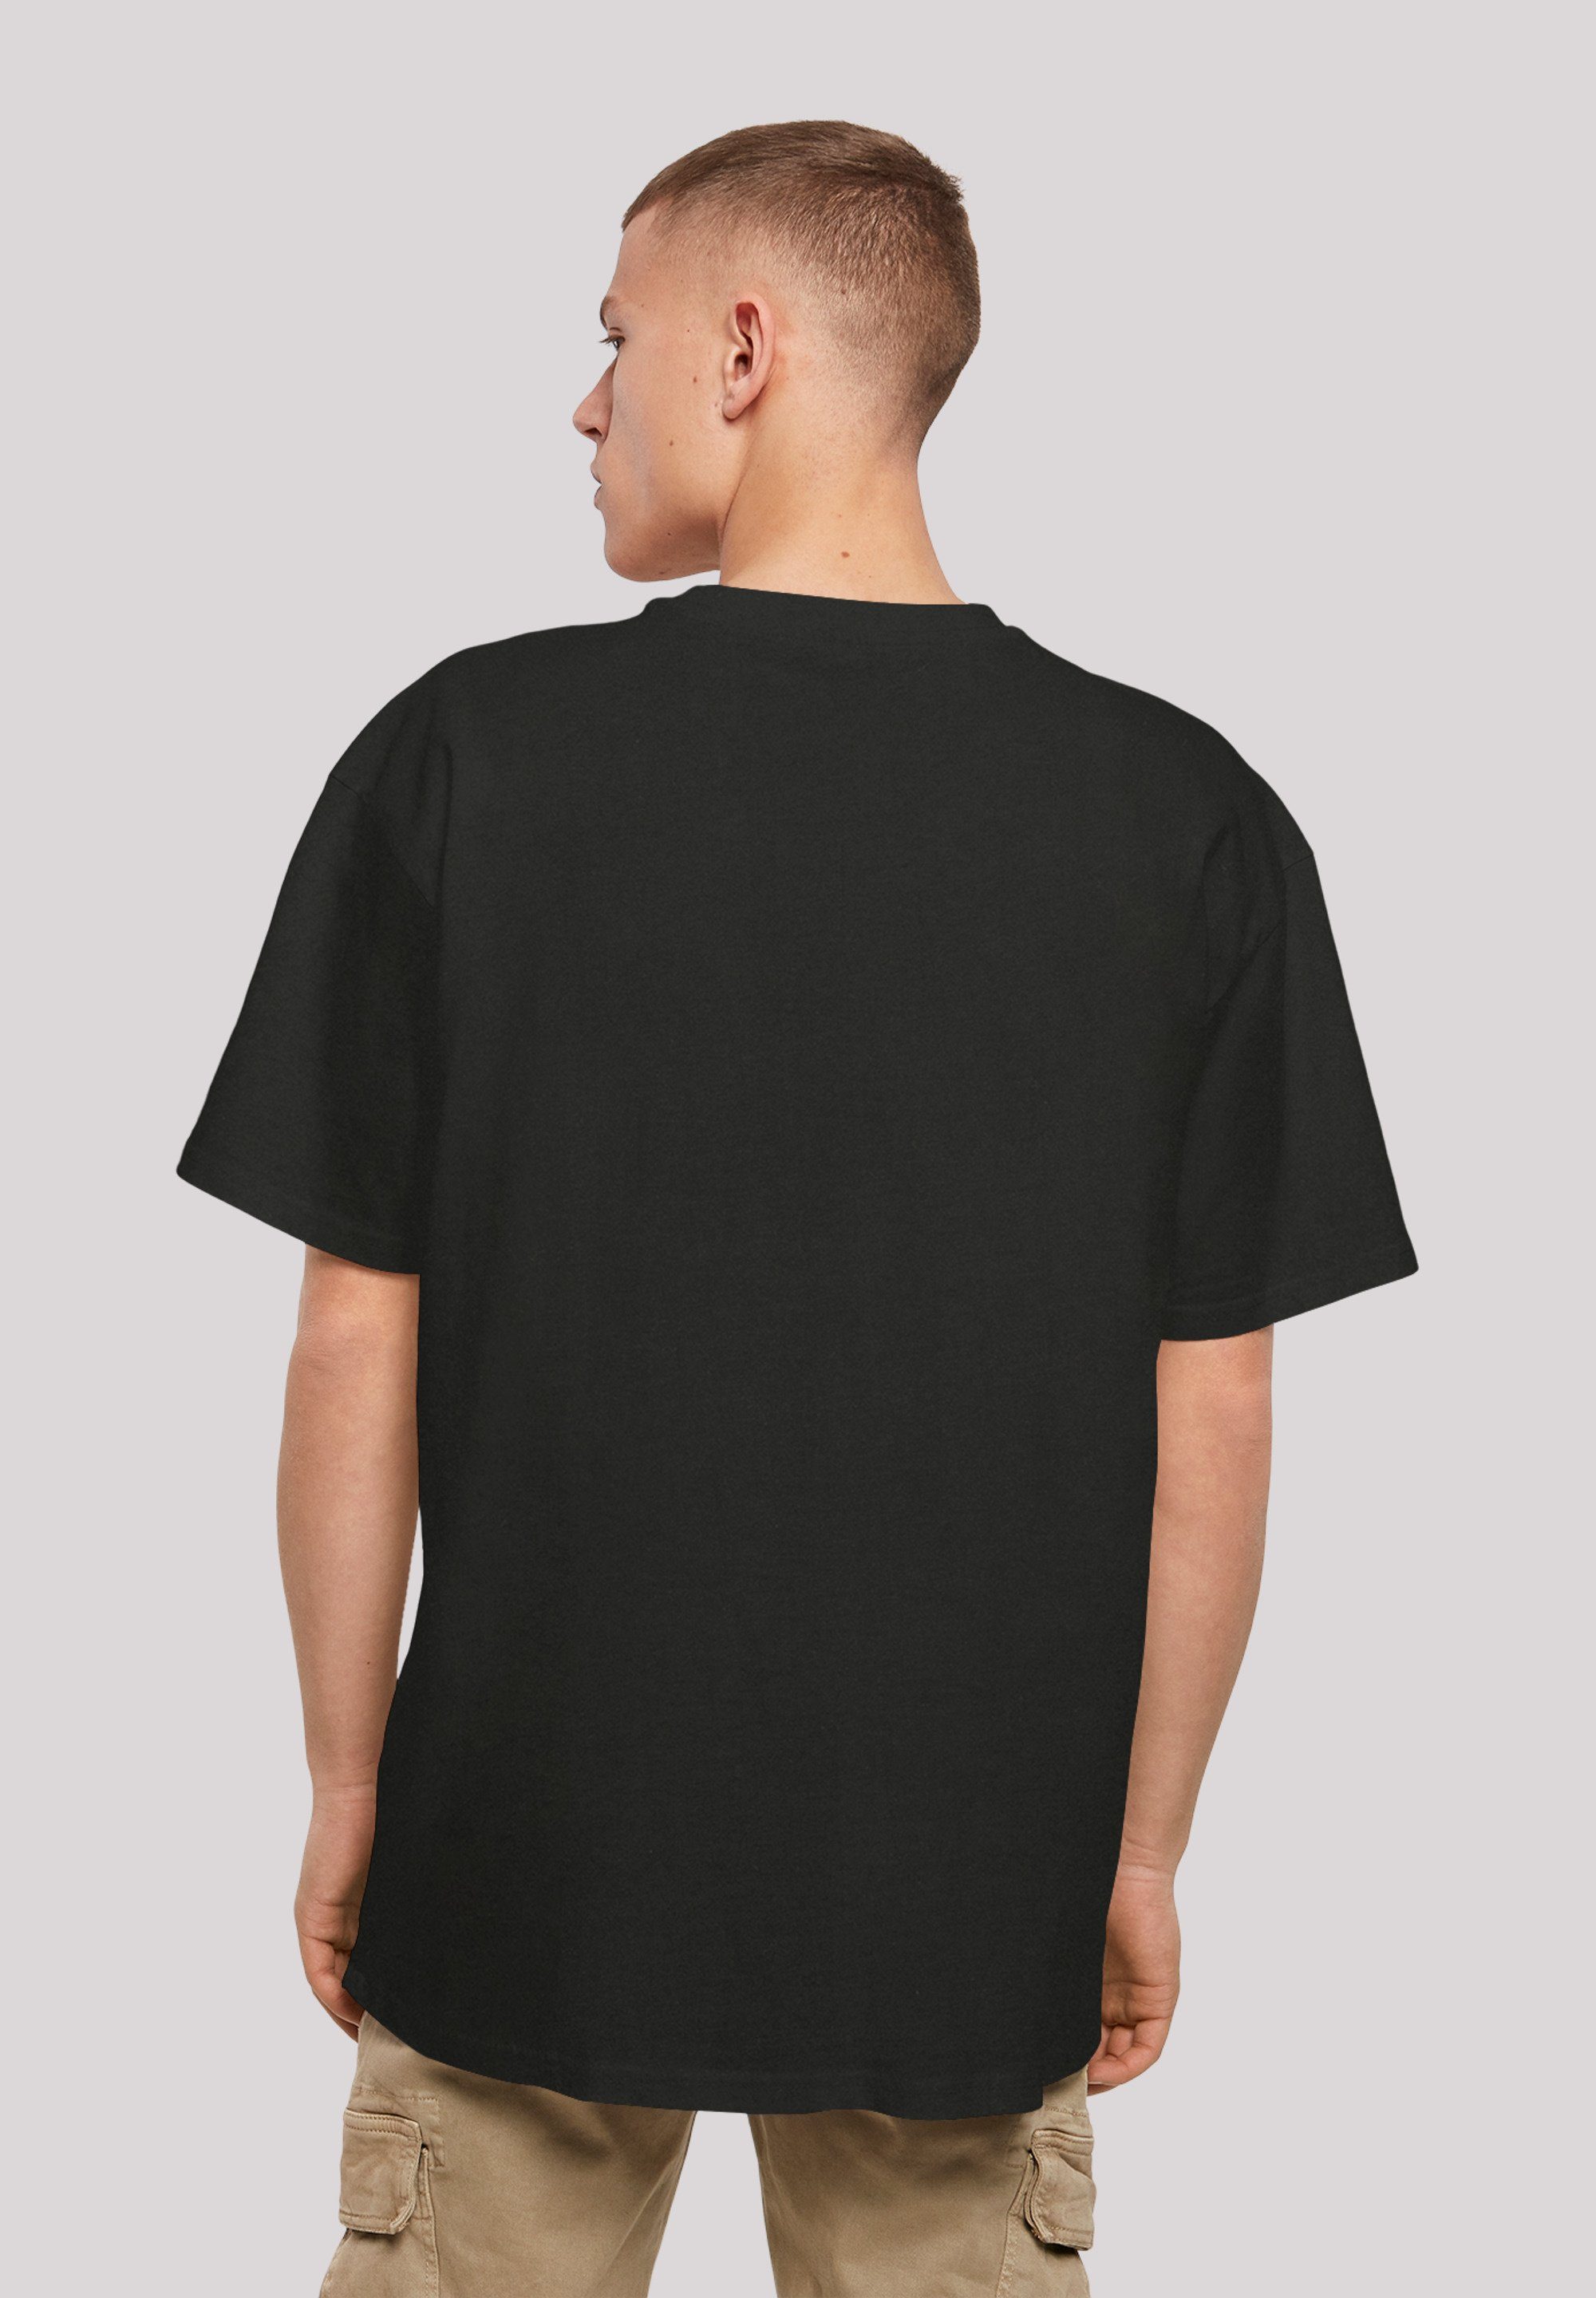 Nominal Print SpaceOne schwarz PHIBER T-Shirt F4NT4STIC